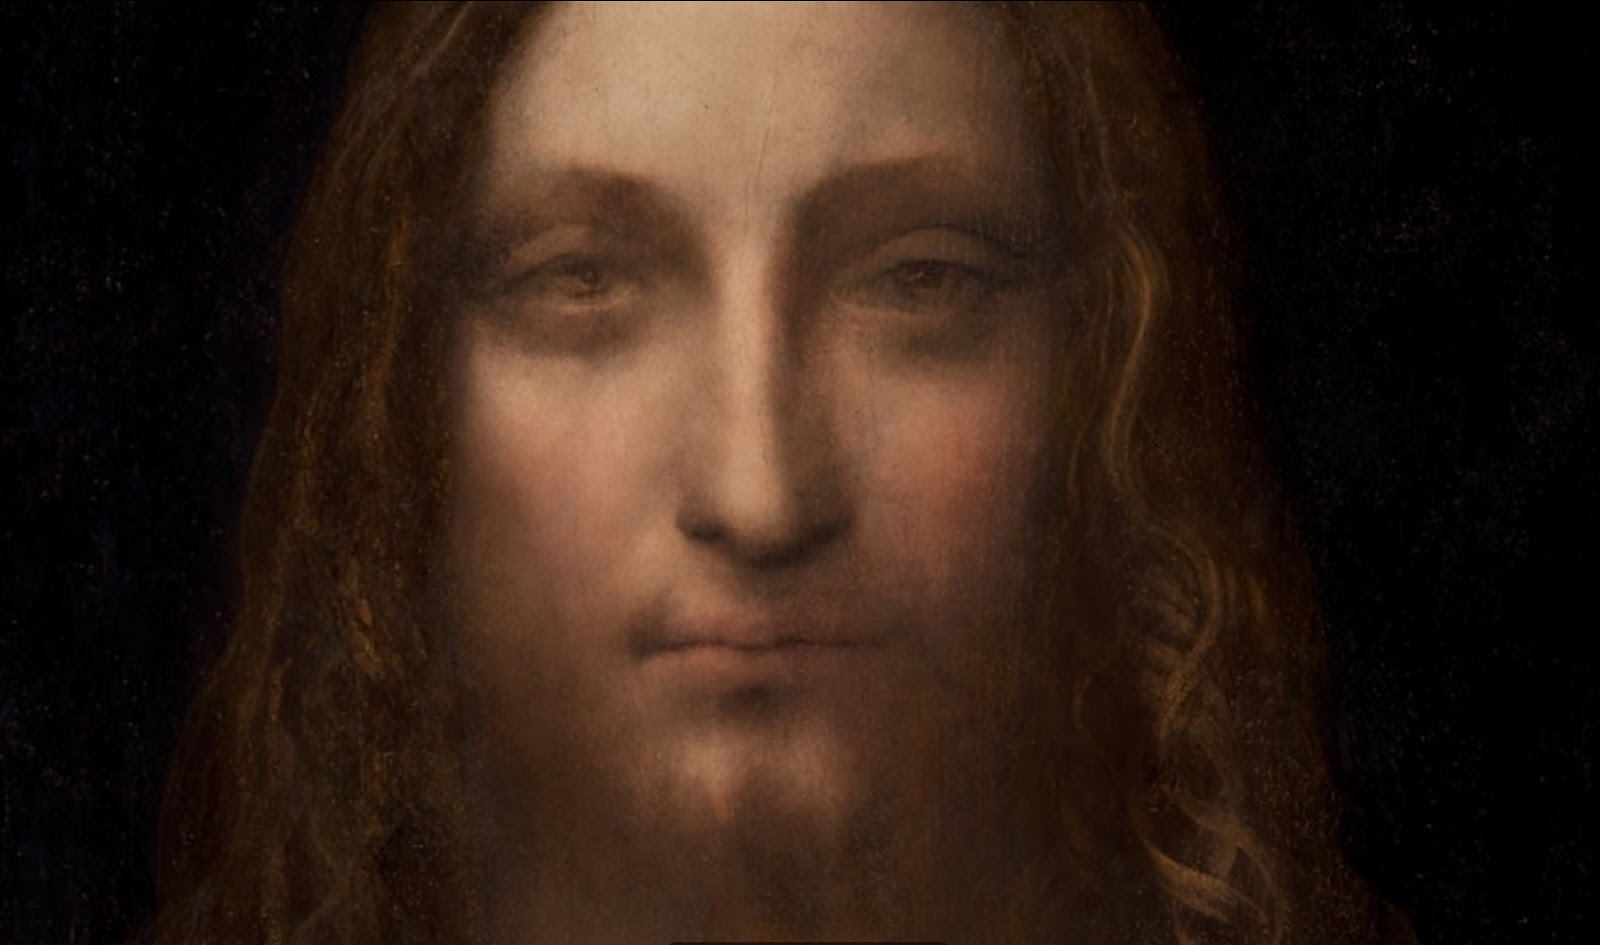 Leonardo+da+Vinci-1452-1519 (857).jpg